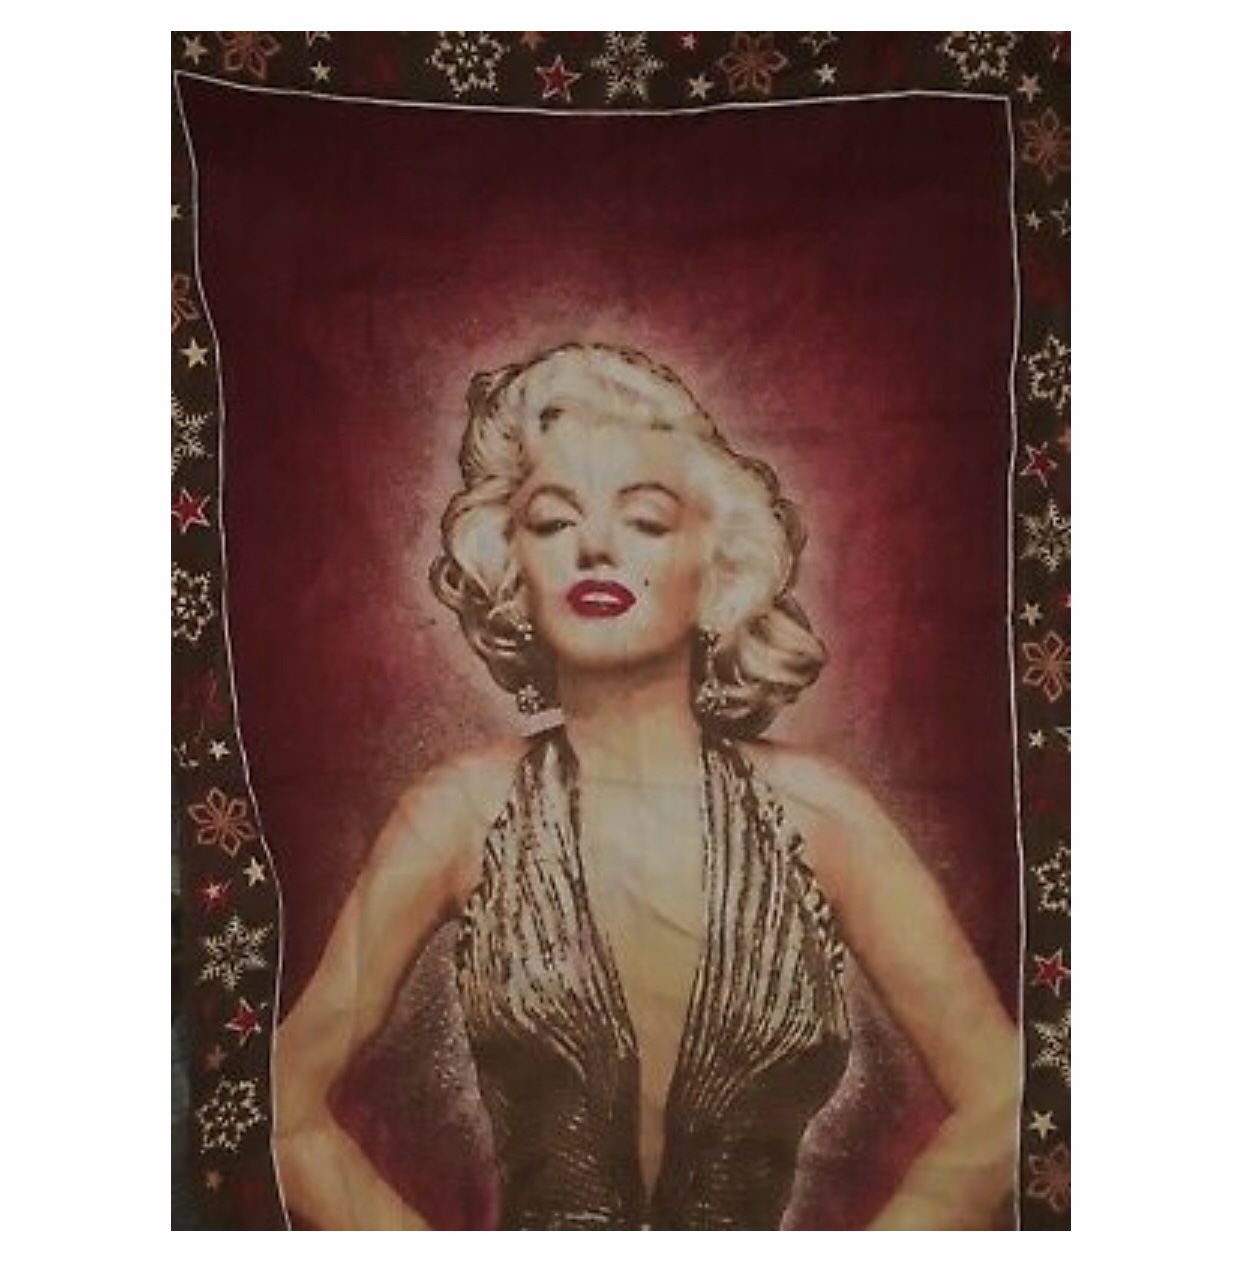 1970s Marilyn Monroe tapestry